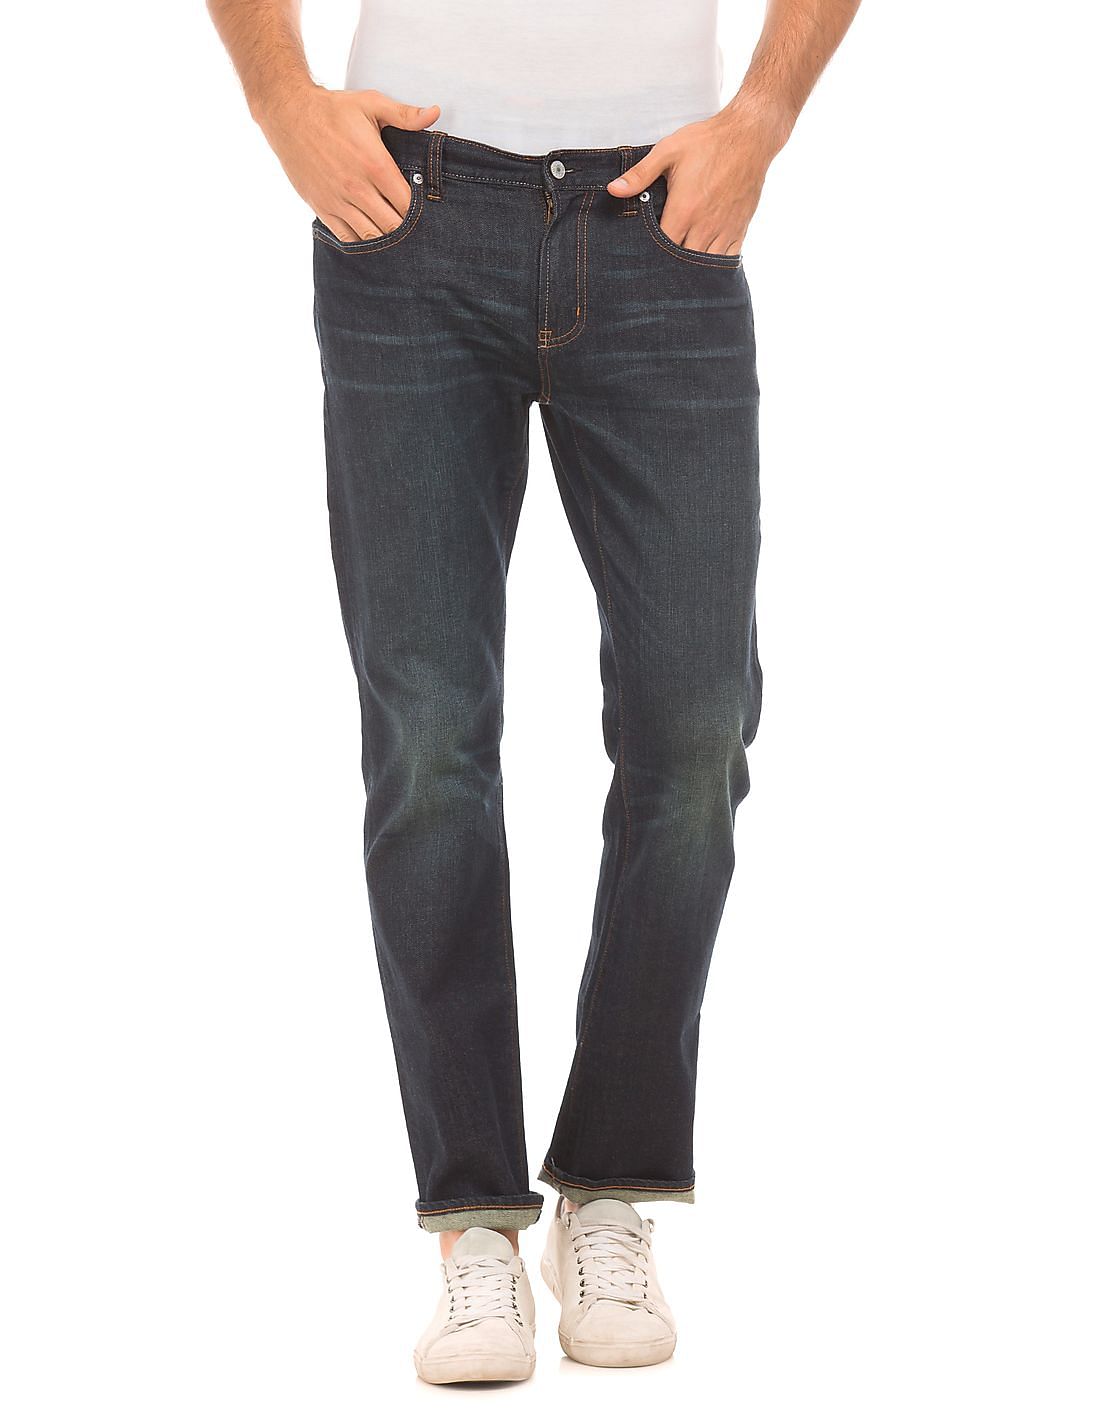 Buy Aeropostale Dark Wash Slim Straight Jeans - NNNOW.com